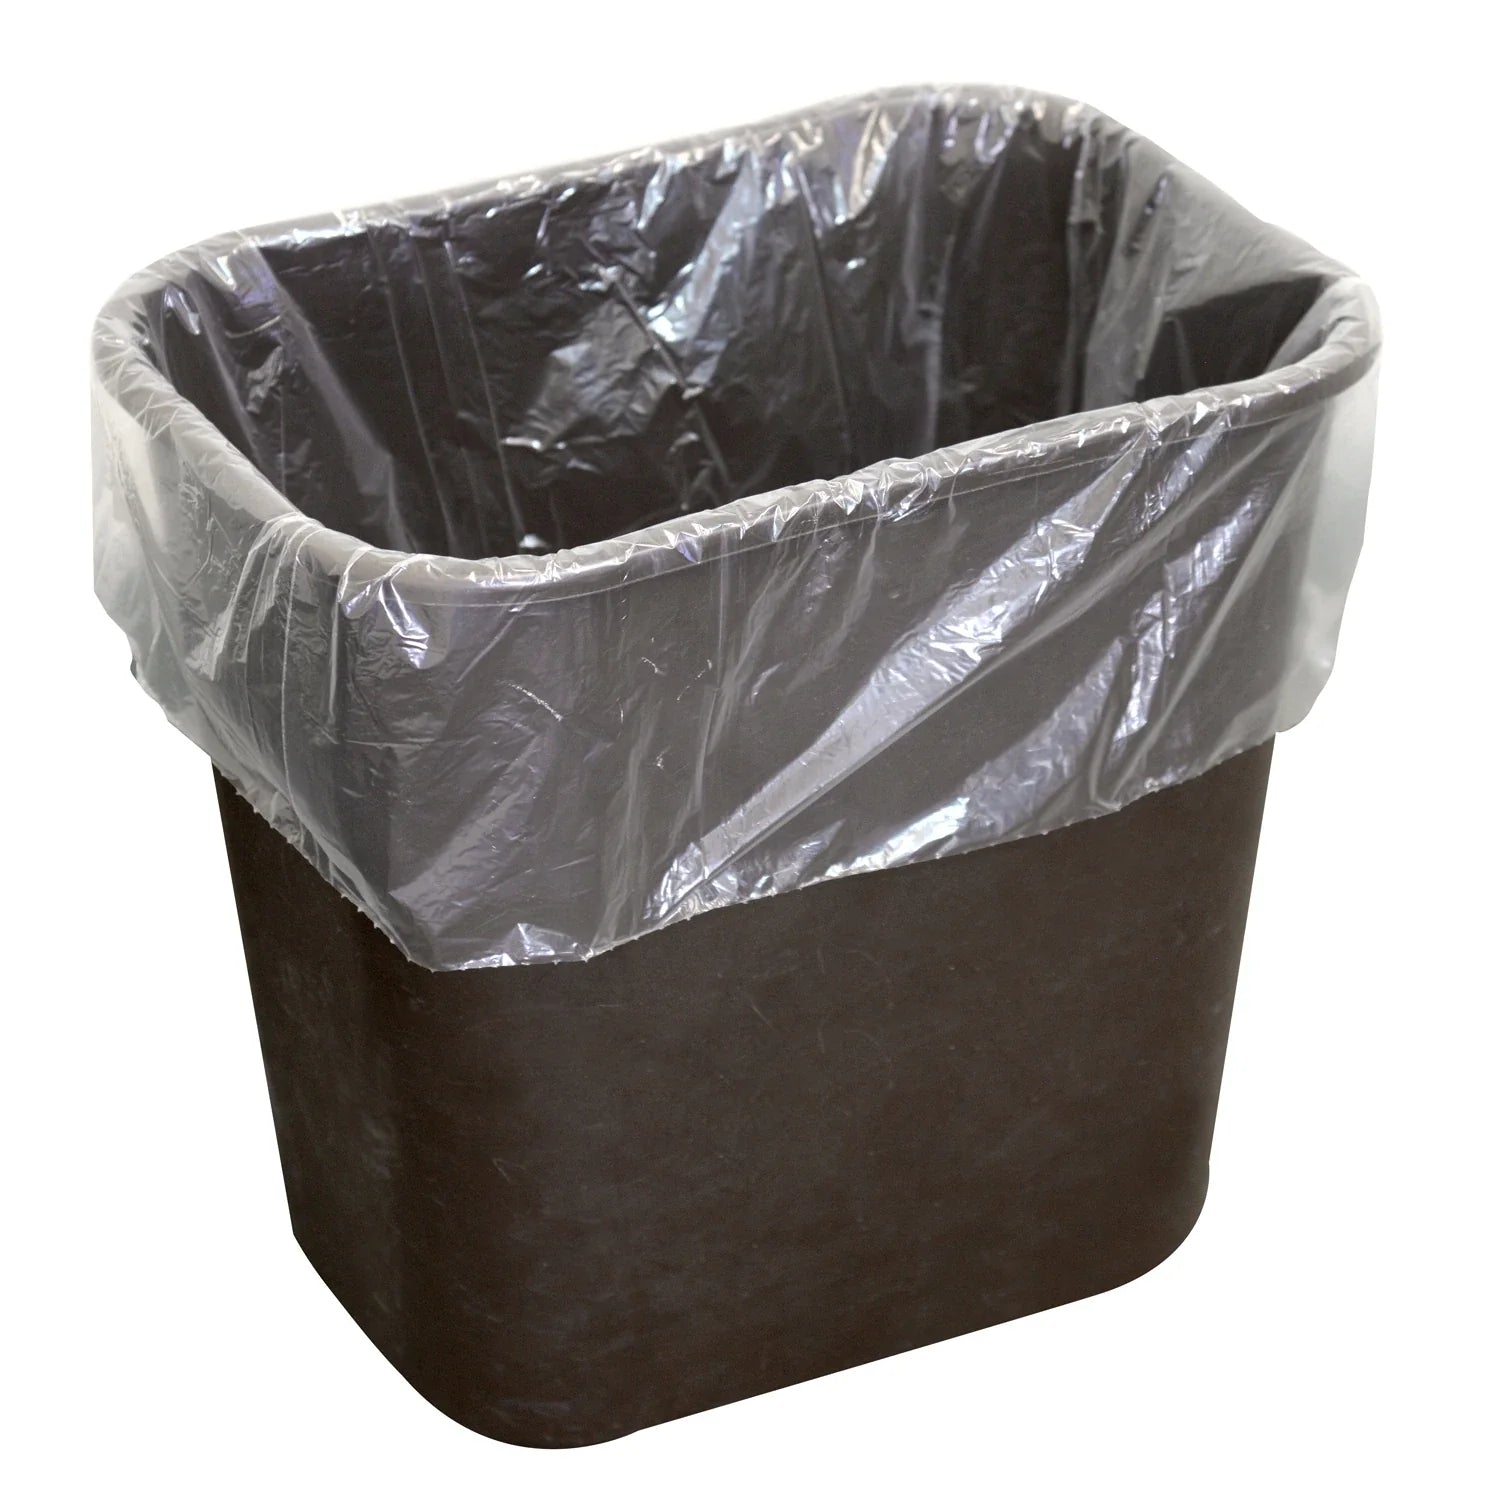 Essential Everyday Trash Bags Wastebasket Liner